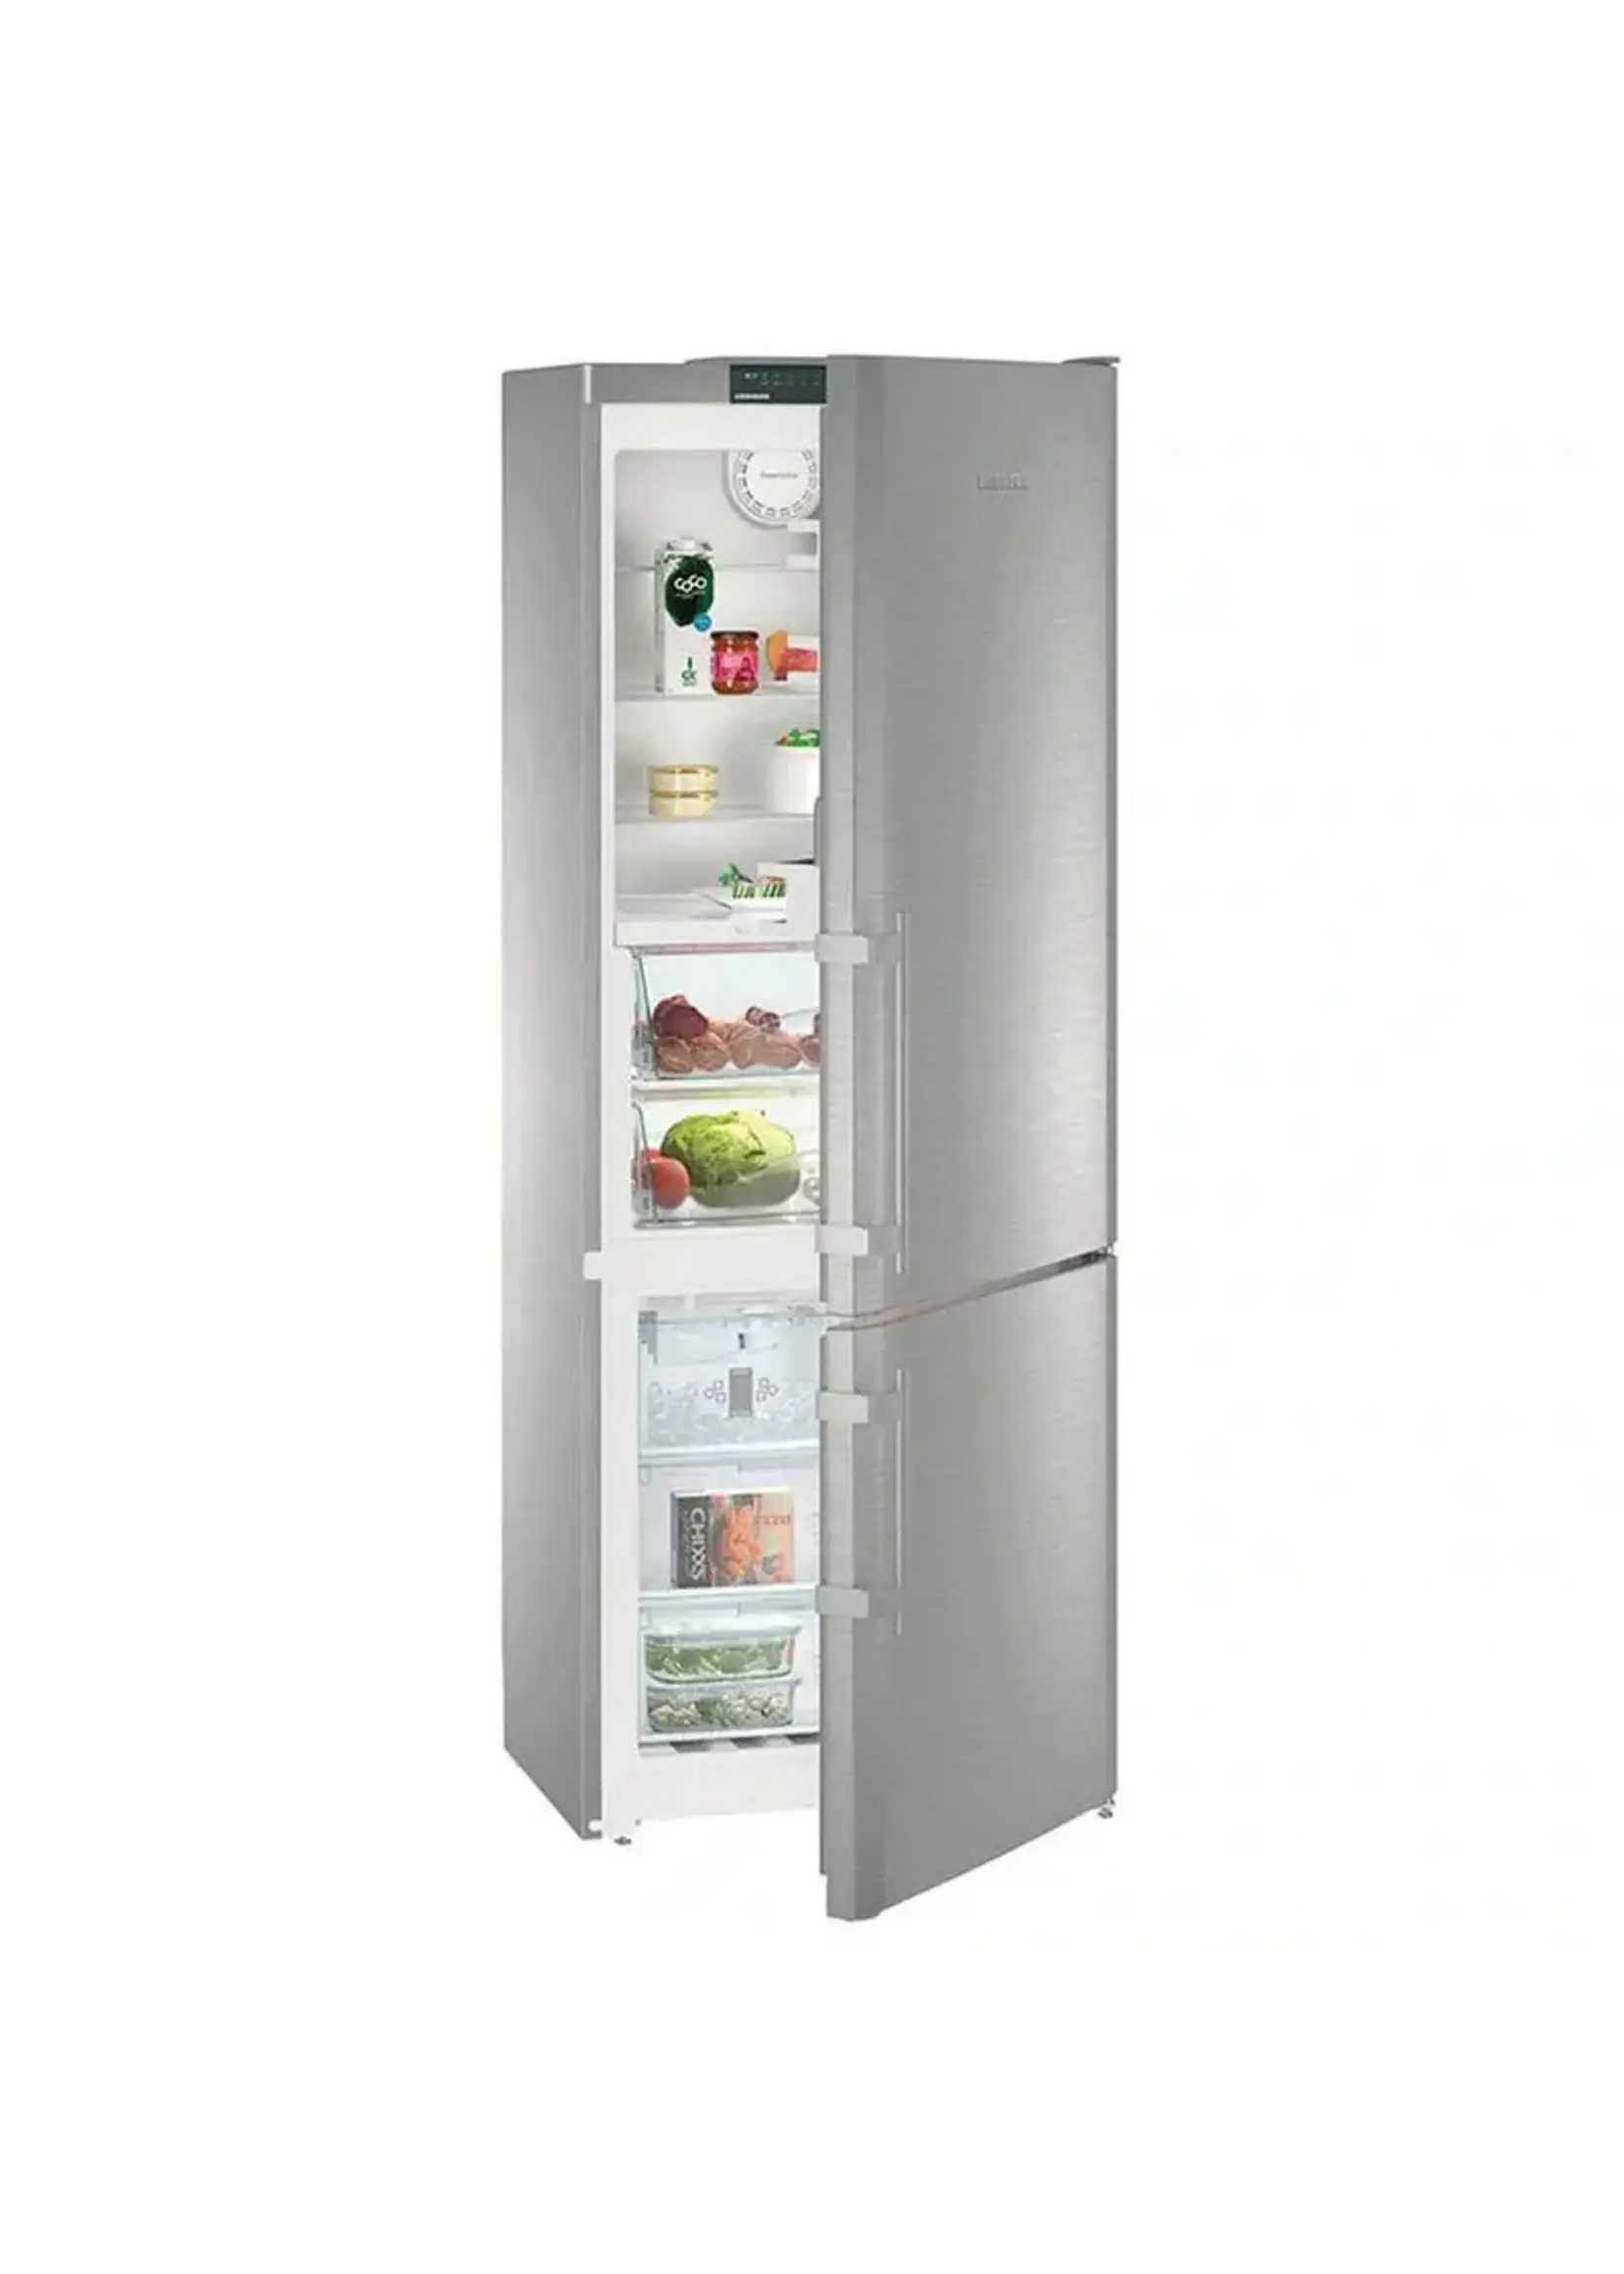 LIEBHERR LIEBHERR CBS-1660 model H 30 Inch Counter Depth Bottom Freezer Refrigerator with 15 Cu. Ft. Capacity